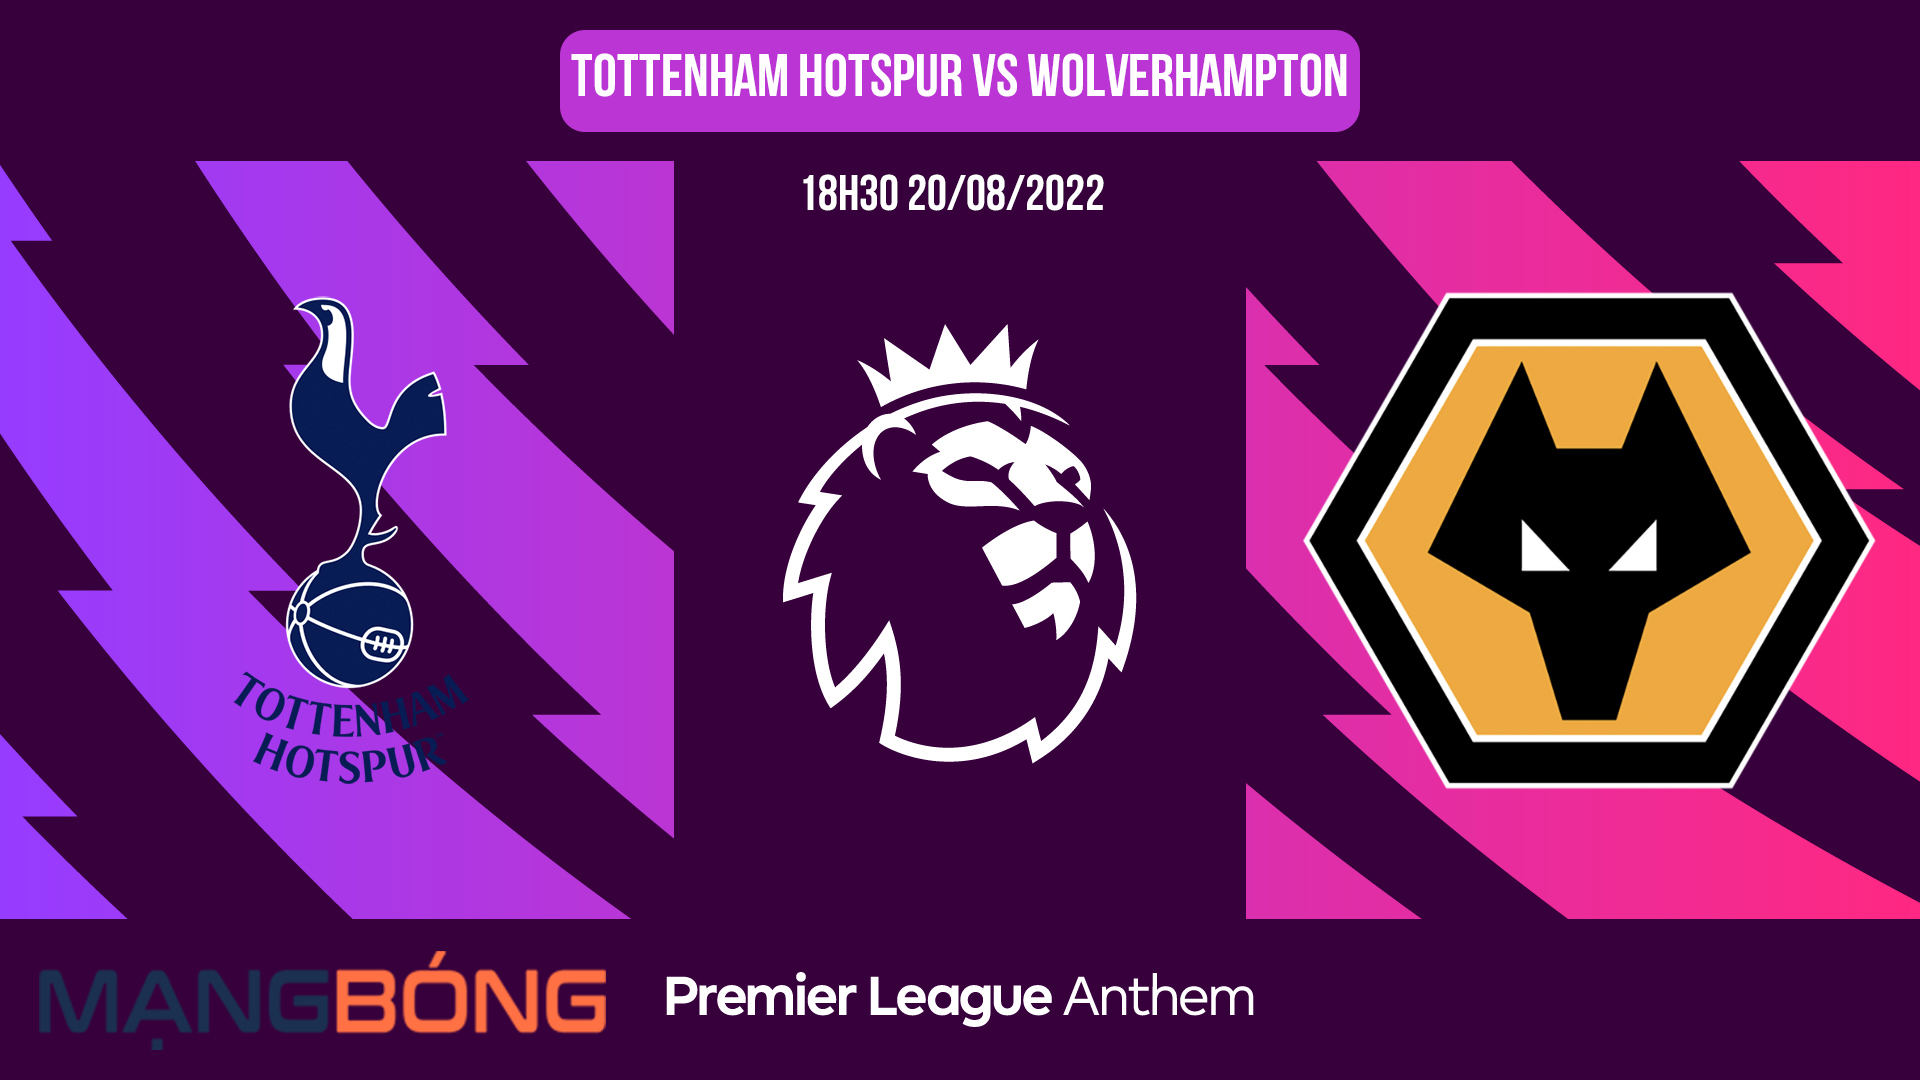 Soi kèo bóng đá Tottenham Hotspur vs Wolverhampton - 18h30 20/08/2022